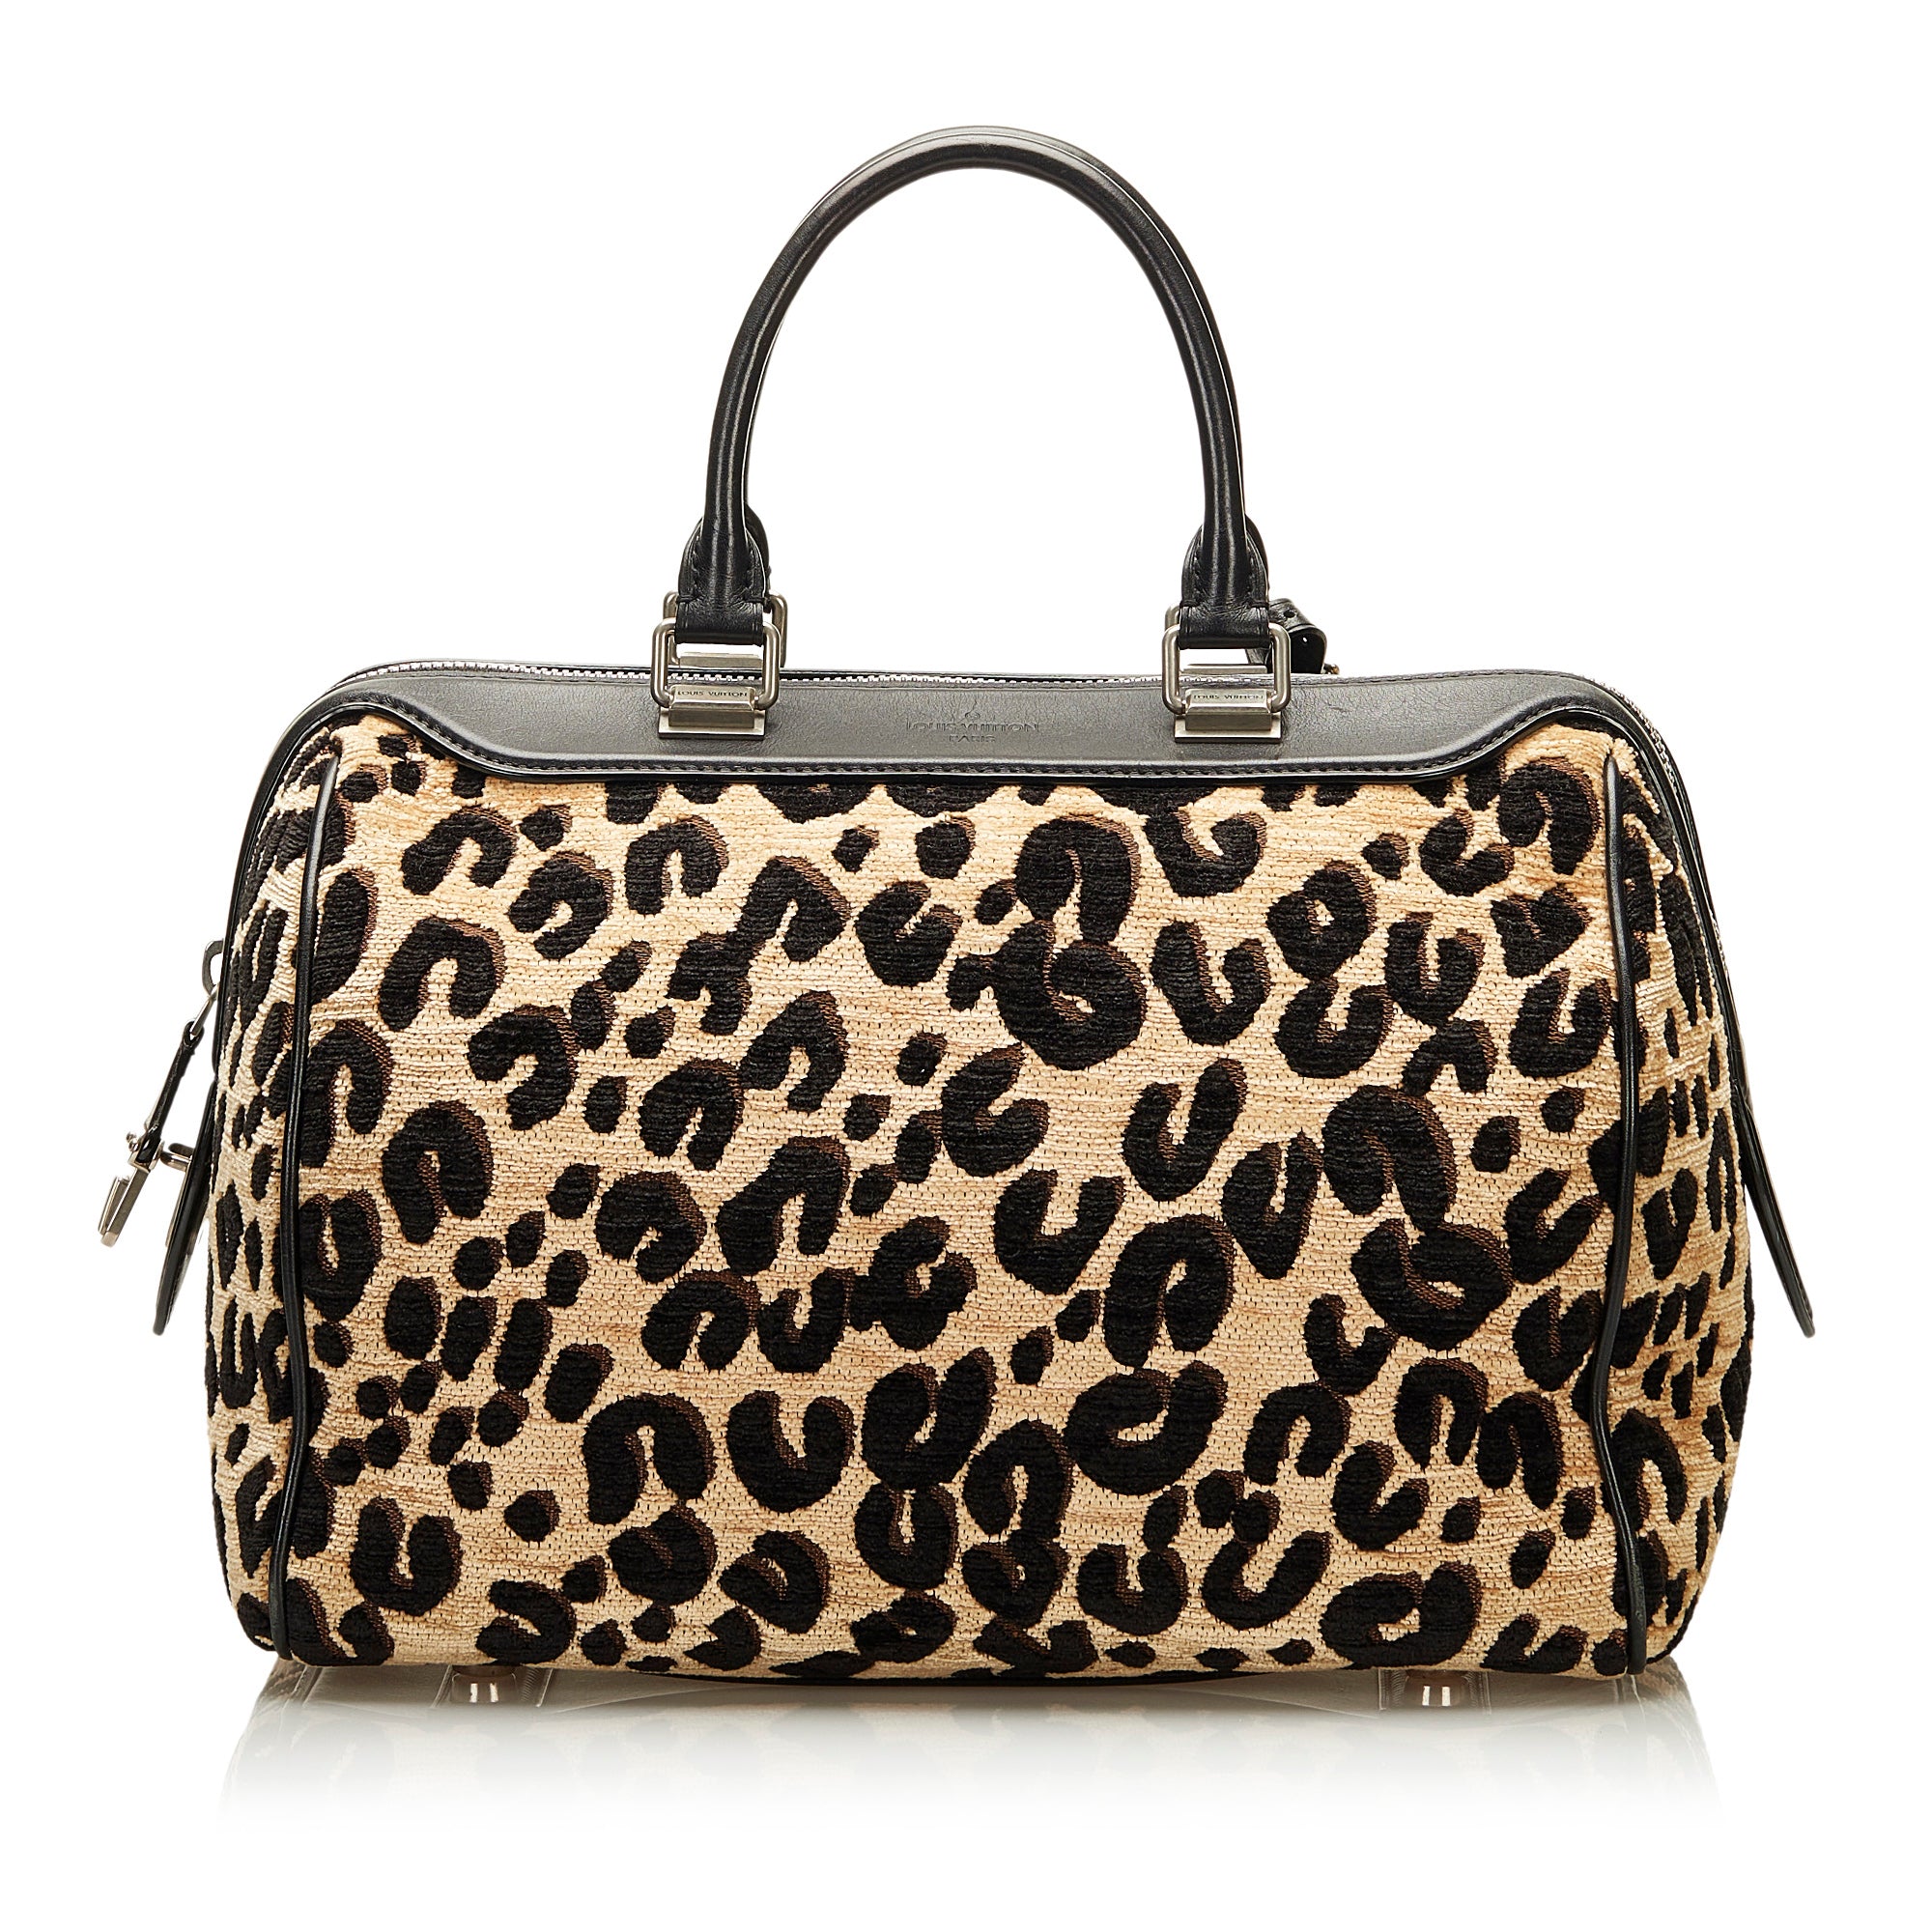 Louis Vuitton Stephen Sprouse Leopard Speedy Boston Bag